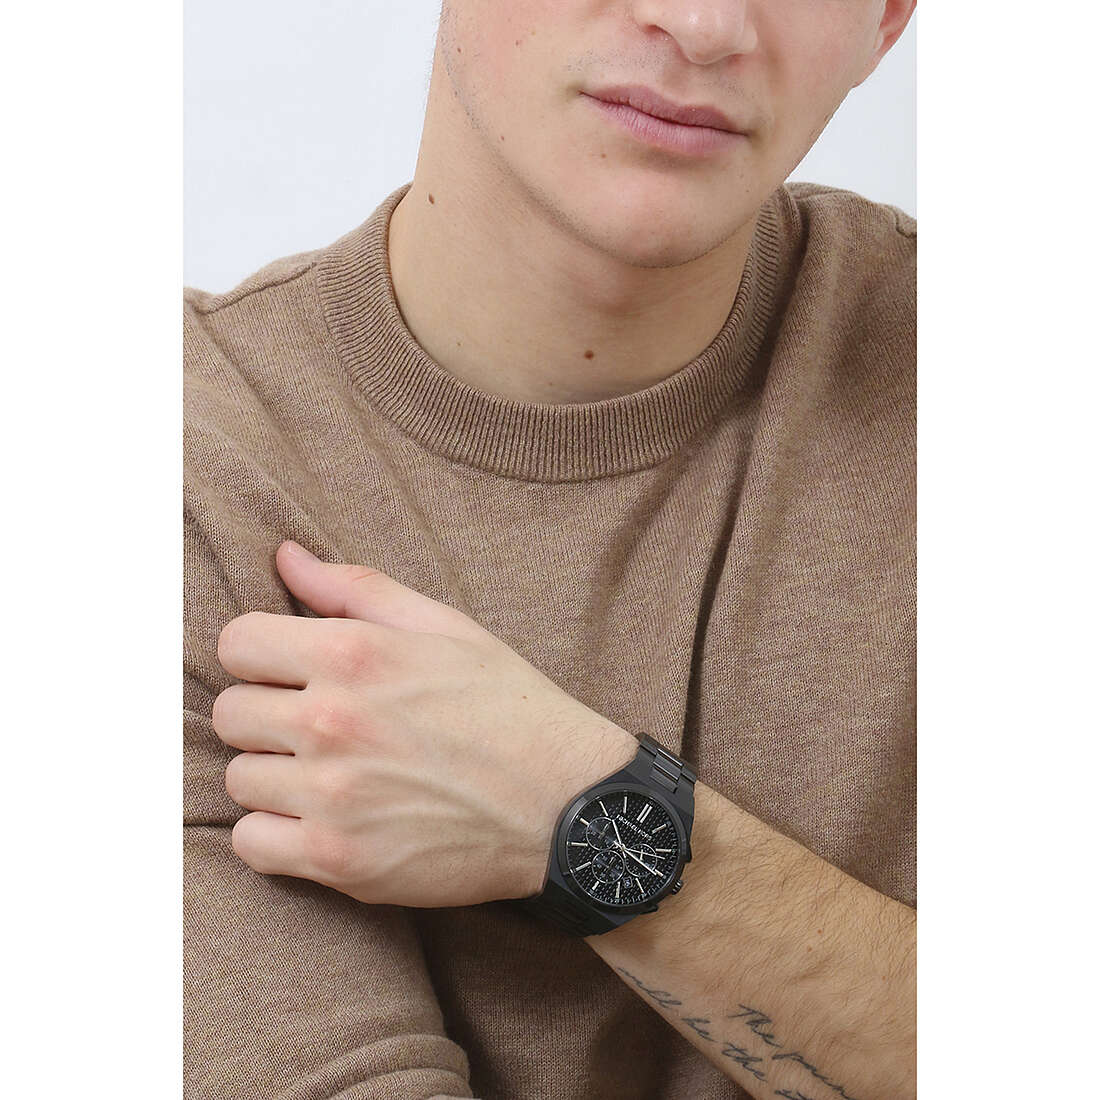 Michael Kors chronographs Lennox man MK9146 wearing